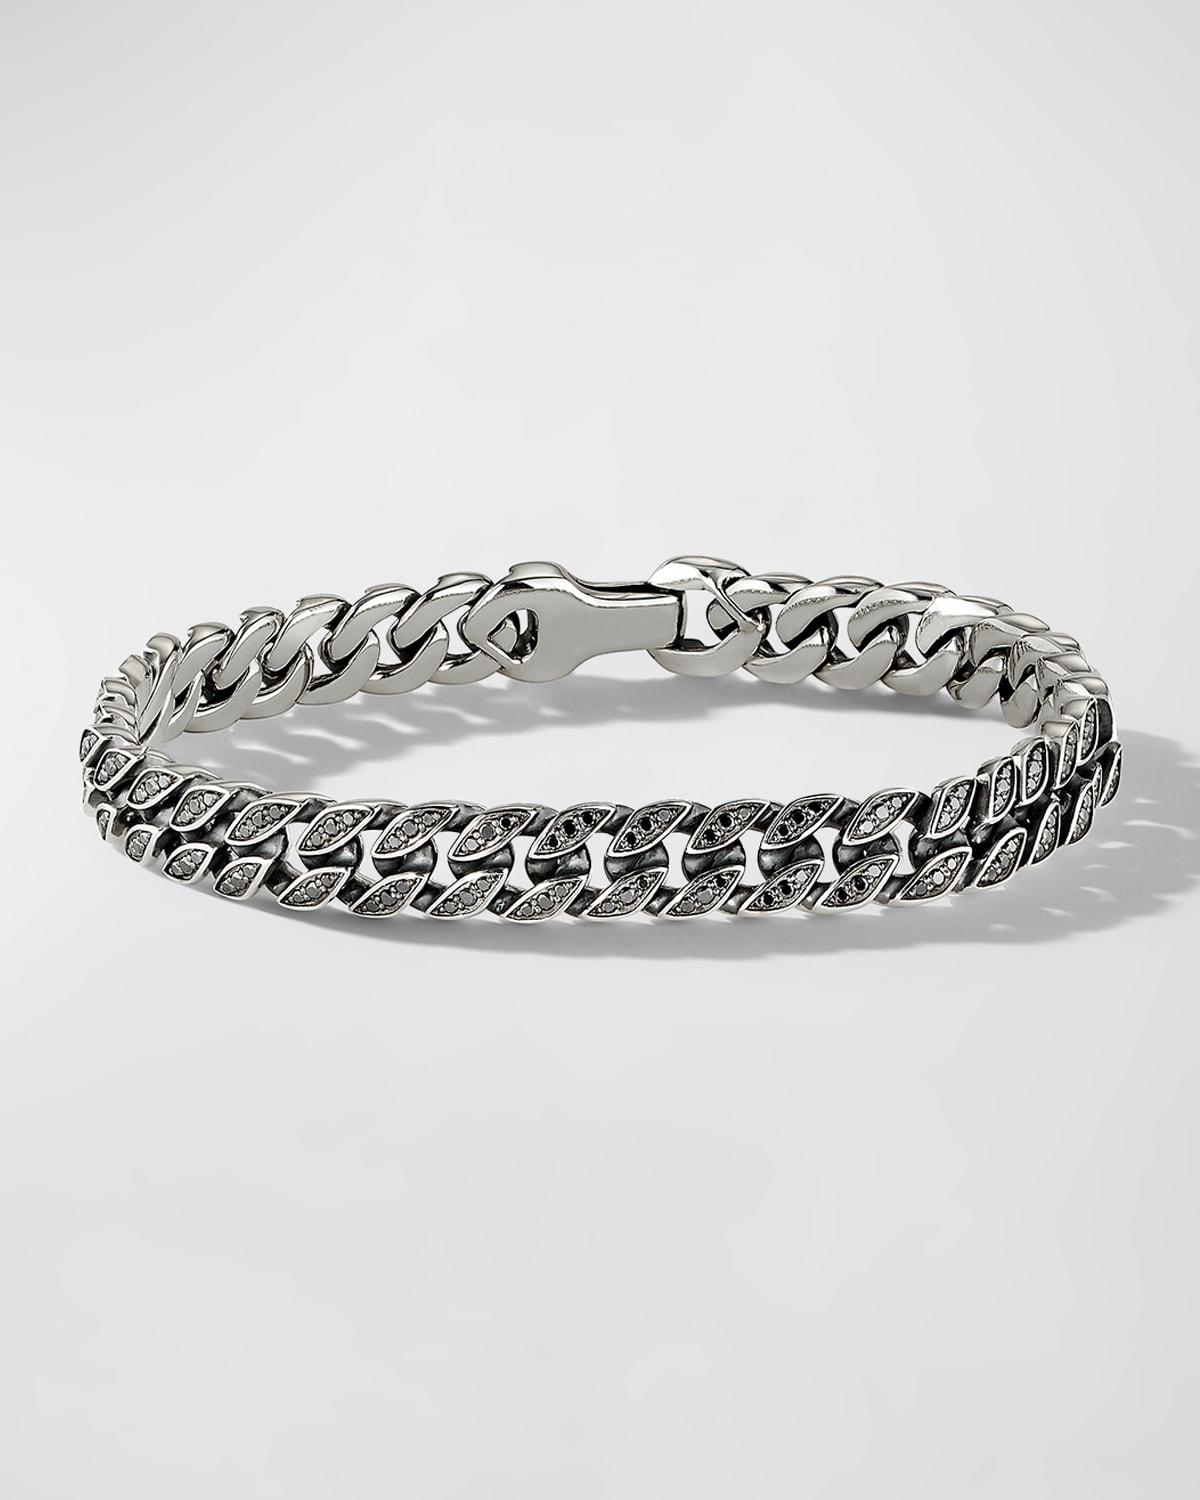 David Yurman Men's Curb Chain Bracelet In Silver With Diamonds, 8mm, 6.5"l In Black Diamond